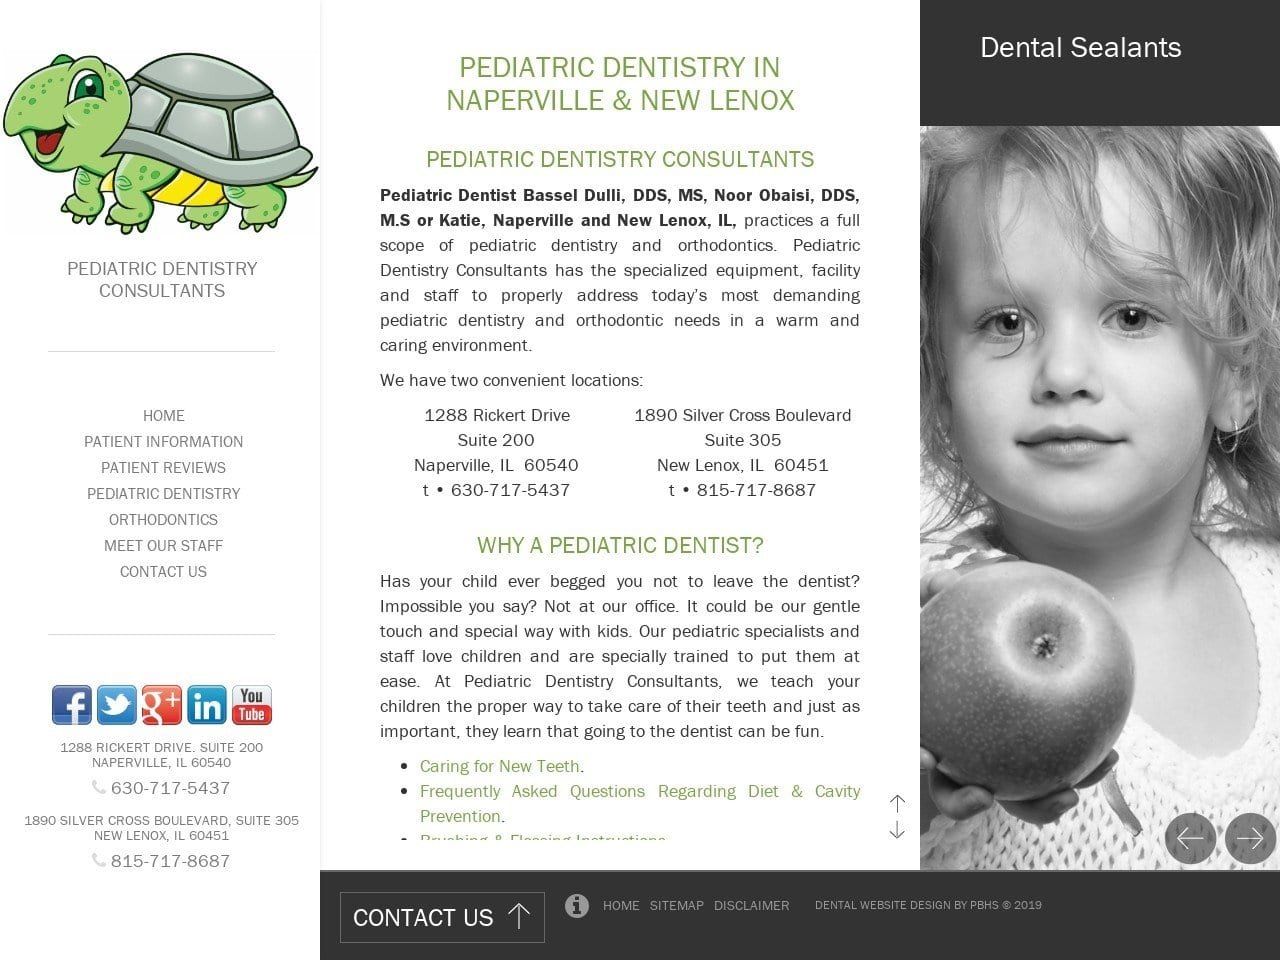 Pediatric Dentistry Consultants Website Screenshot from pediatricdentistryconsultants.com